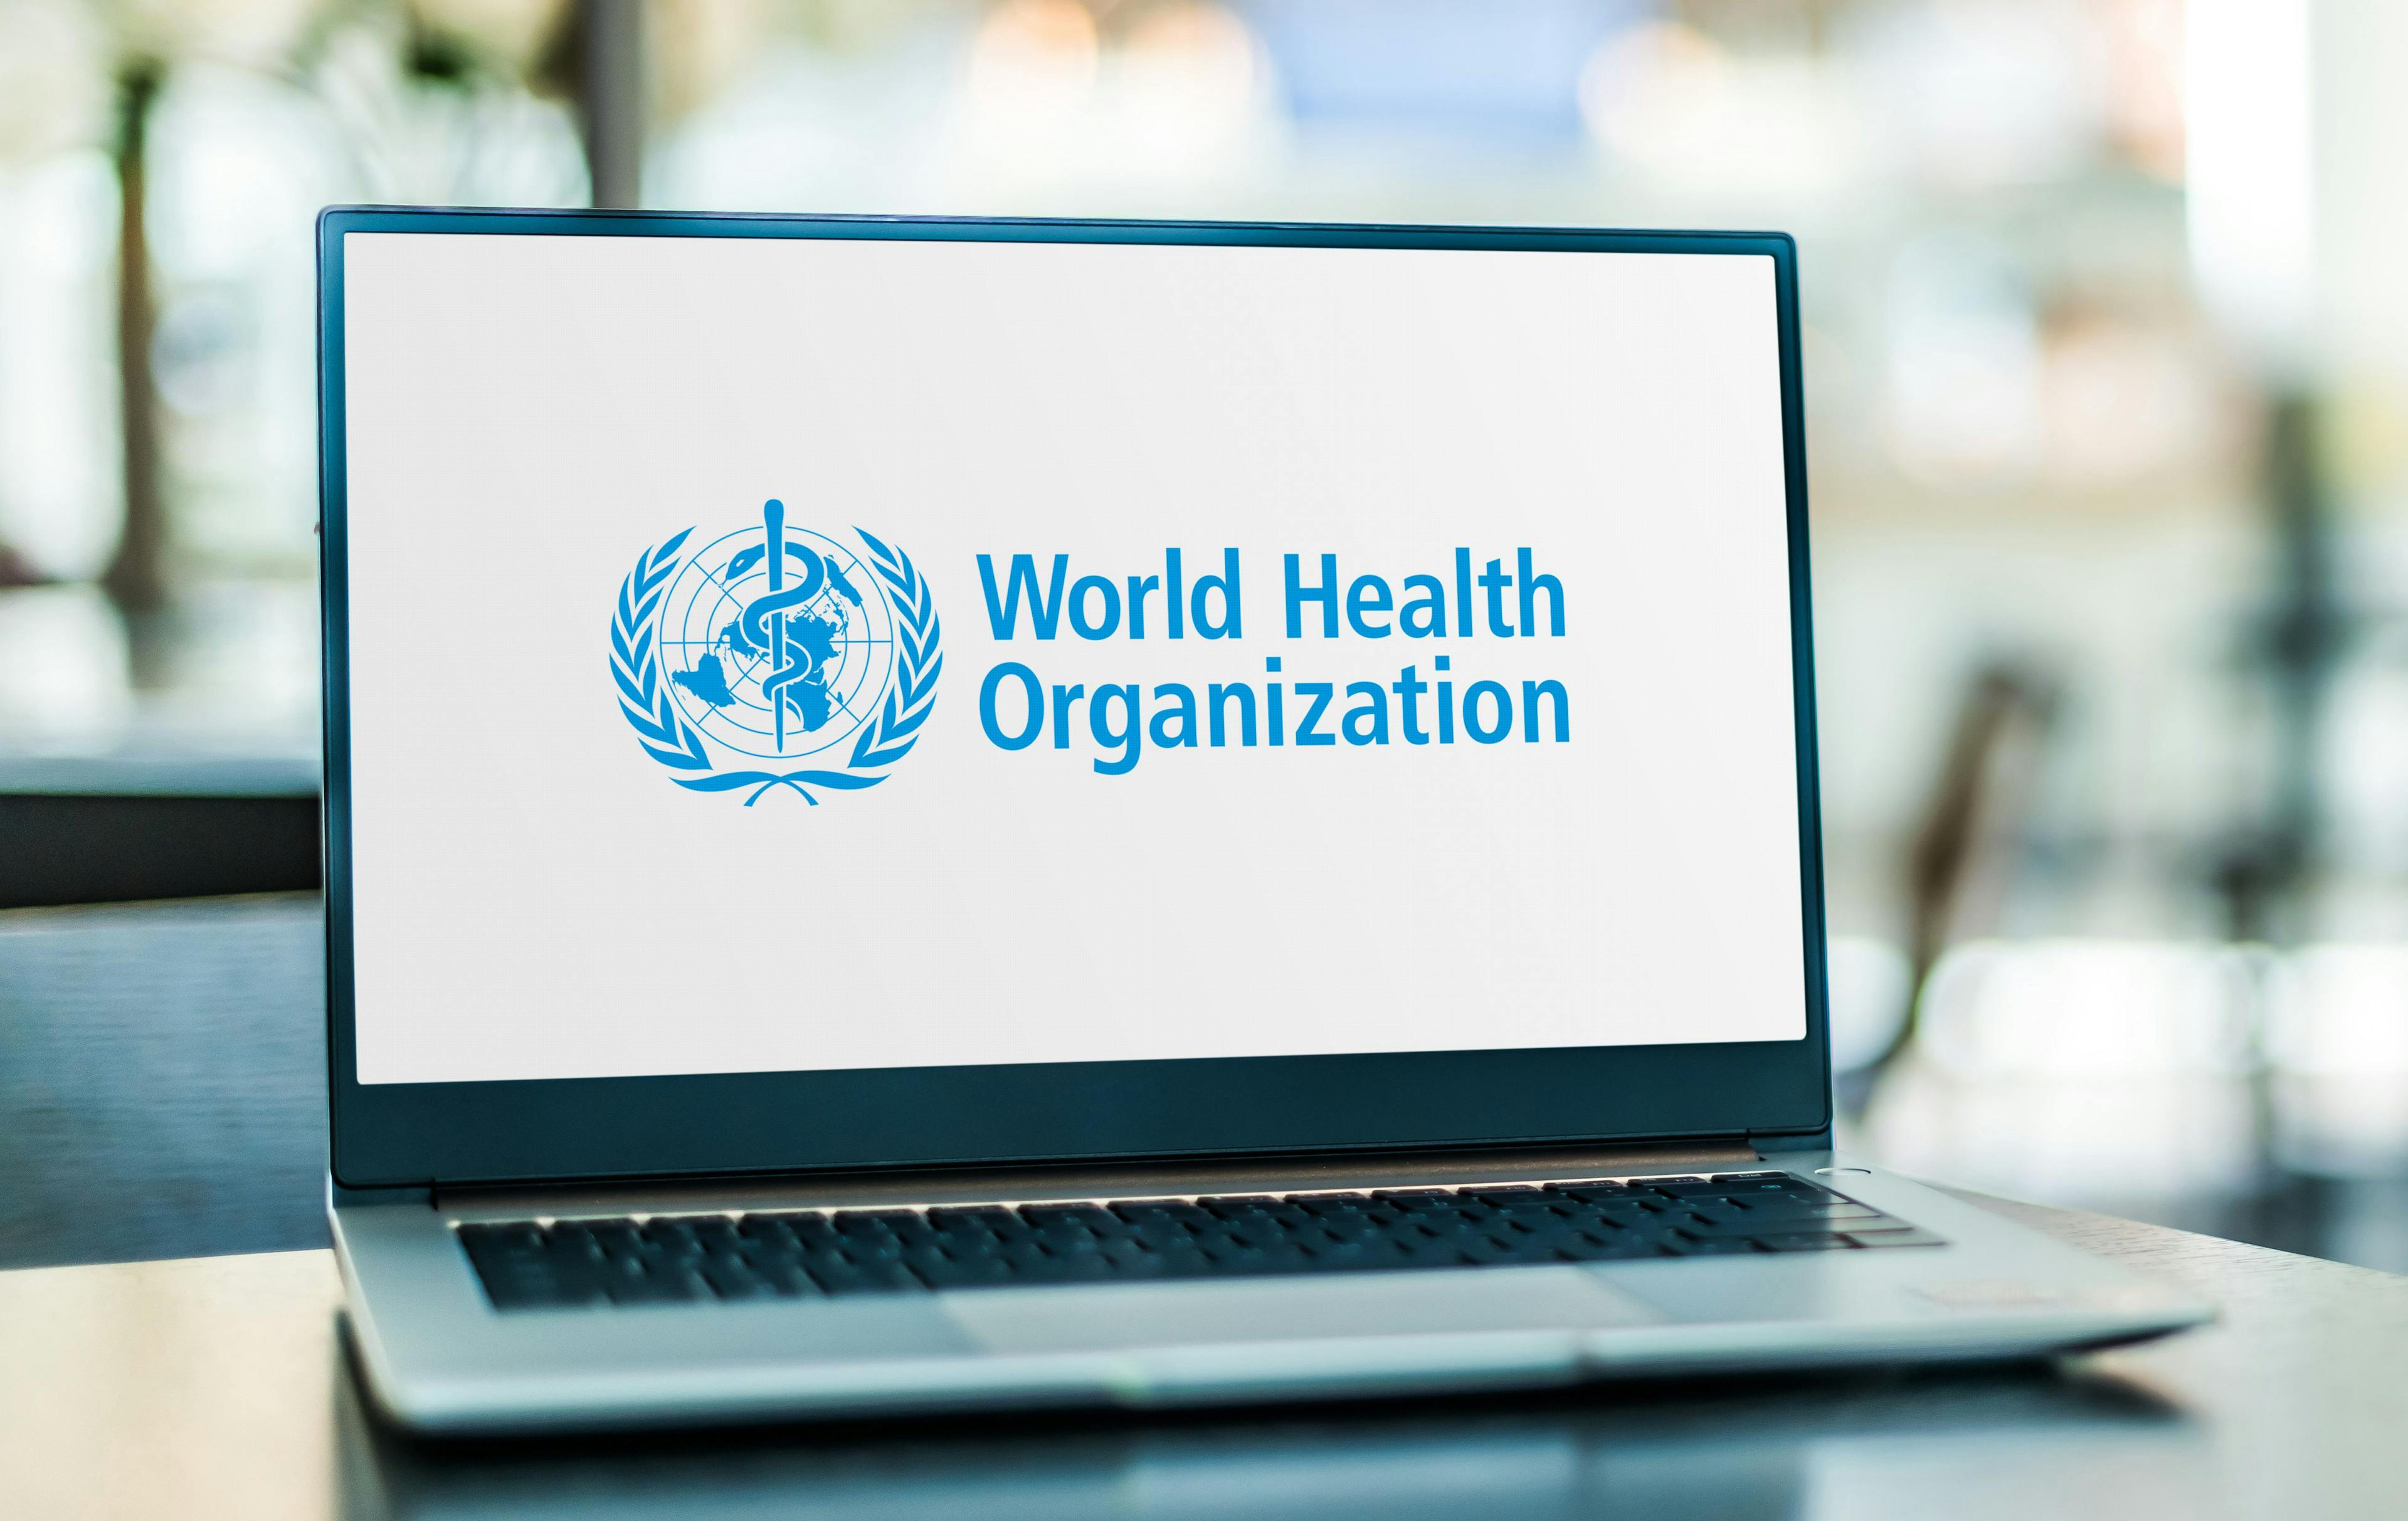 world health organization